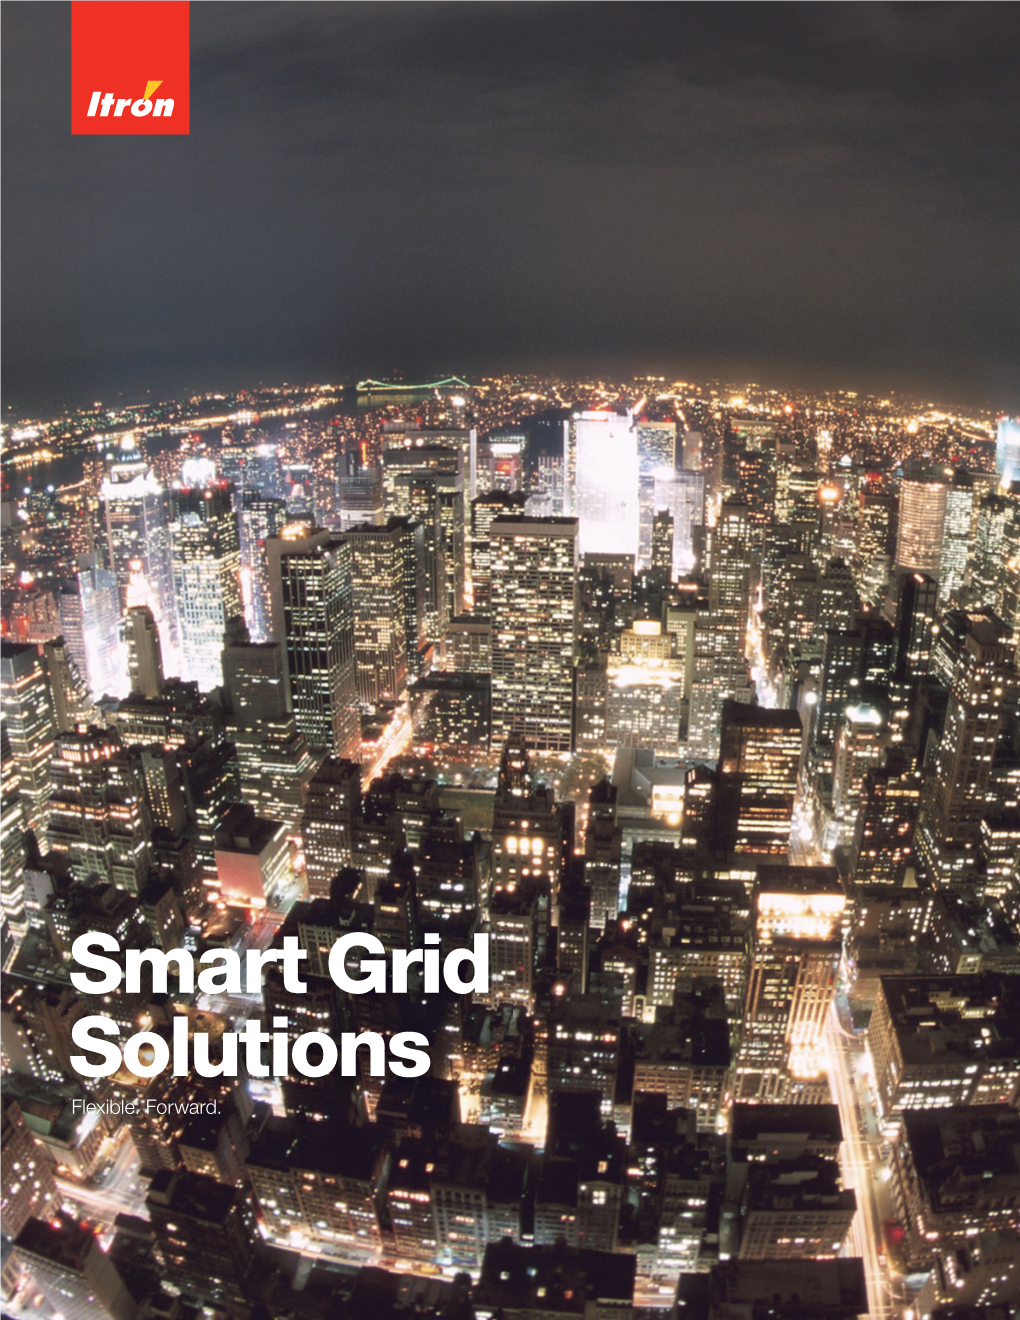 Smart Grid Overview Brochure